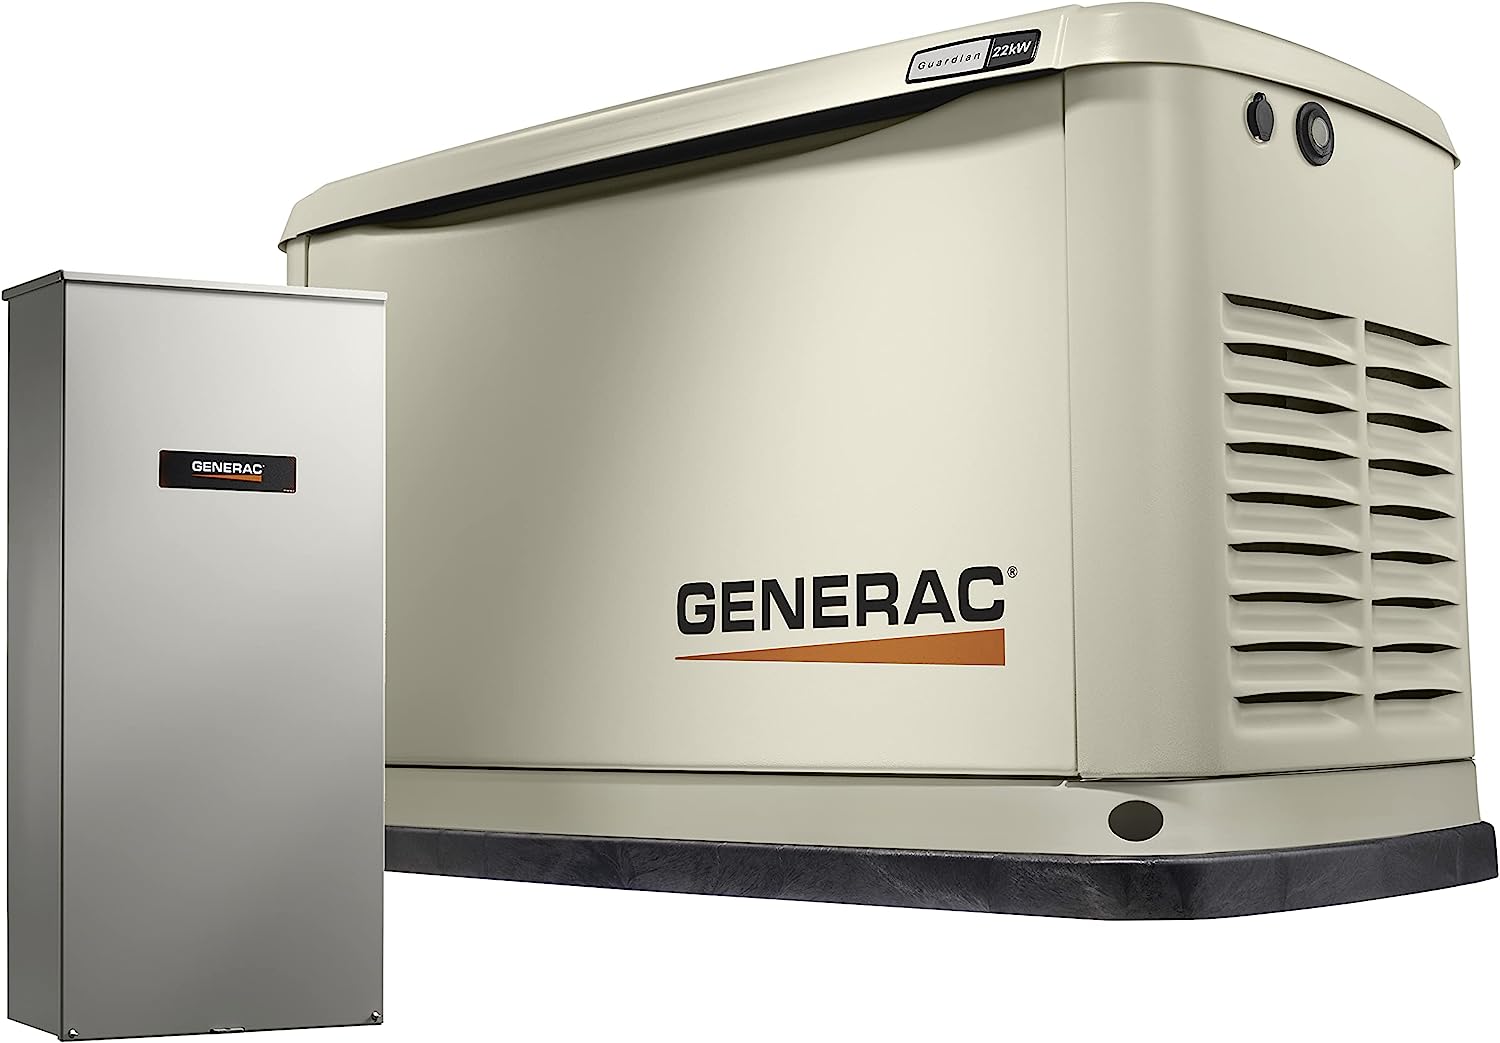 Generac 7043 22kW Air Cooled Guardian Series Home [...]